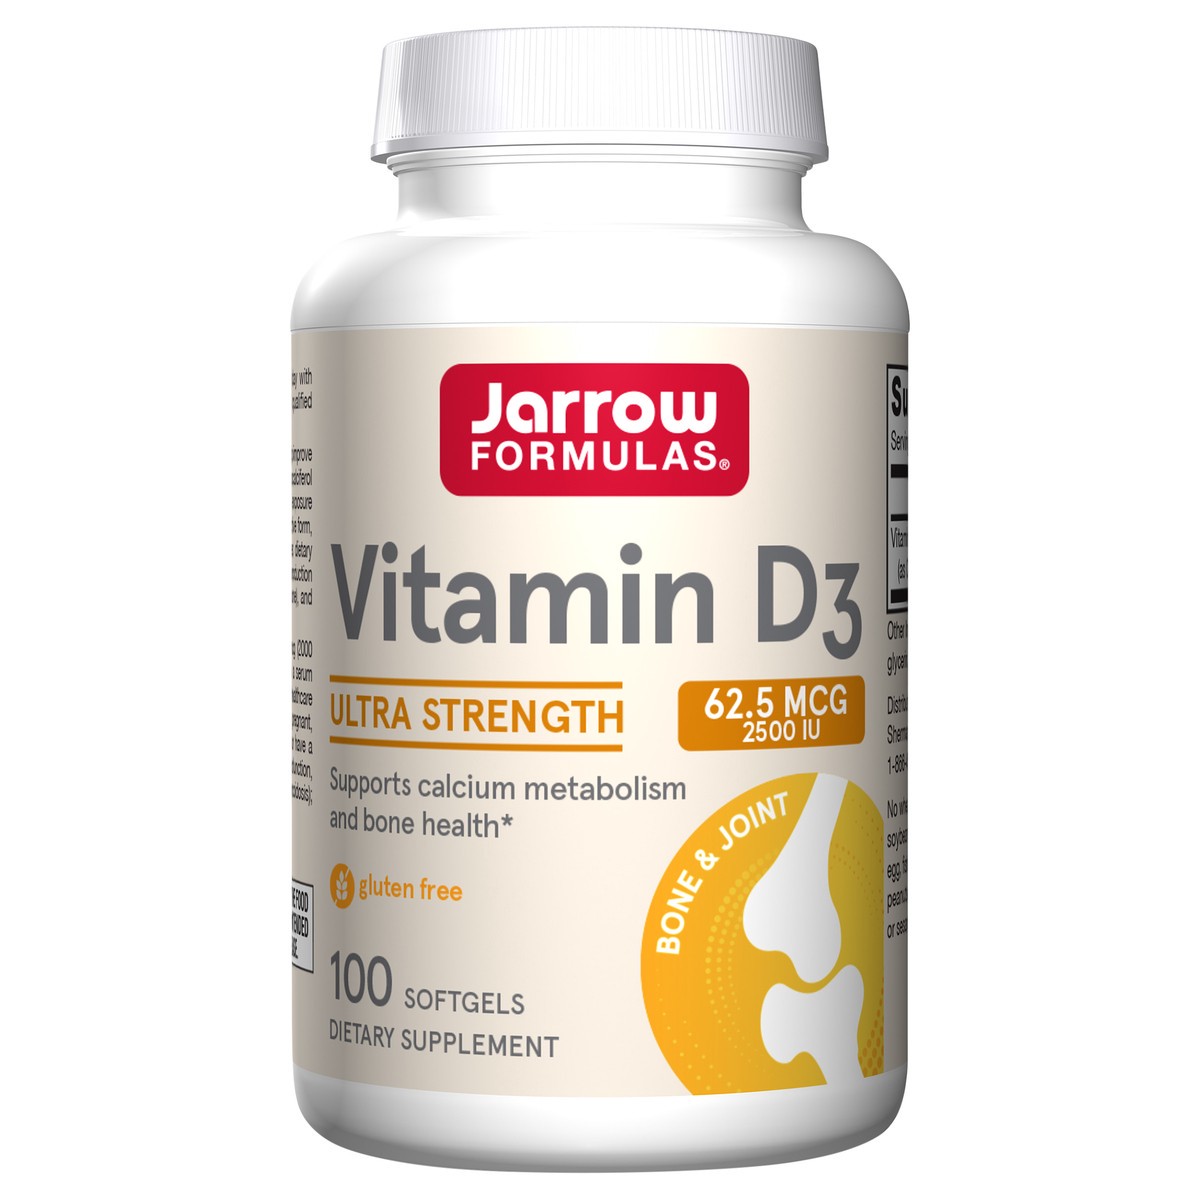 slide 4 of 4, Jarrow Formulas Vitamin D3 Ultra Strength 2500 IU (62.5 mcg) - 100 Servings (Softgels) - Supports Calcium Metabolism, Bone Health & Immune Response - Dietary Supplement - Gluten Free, 100 ct